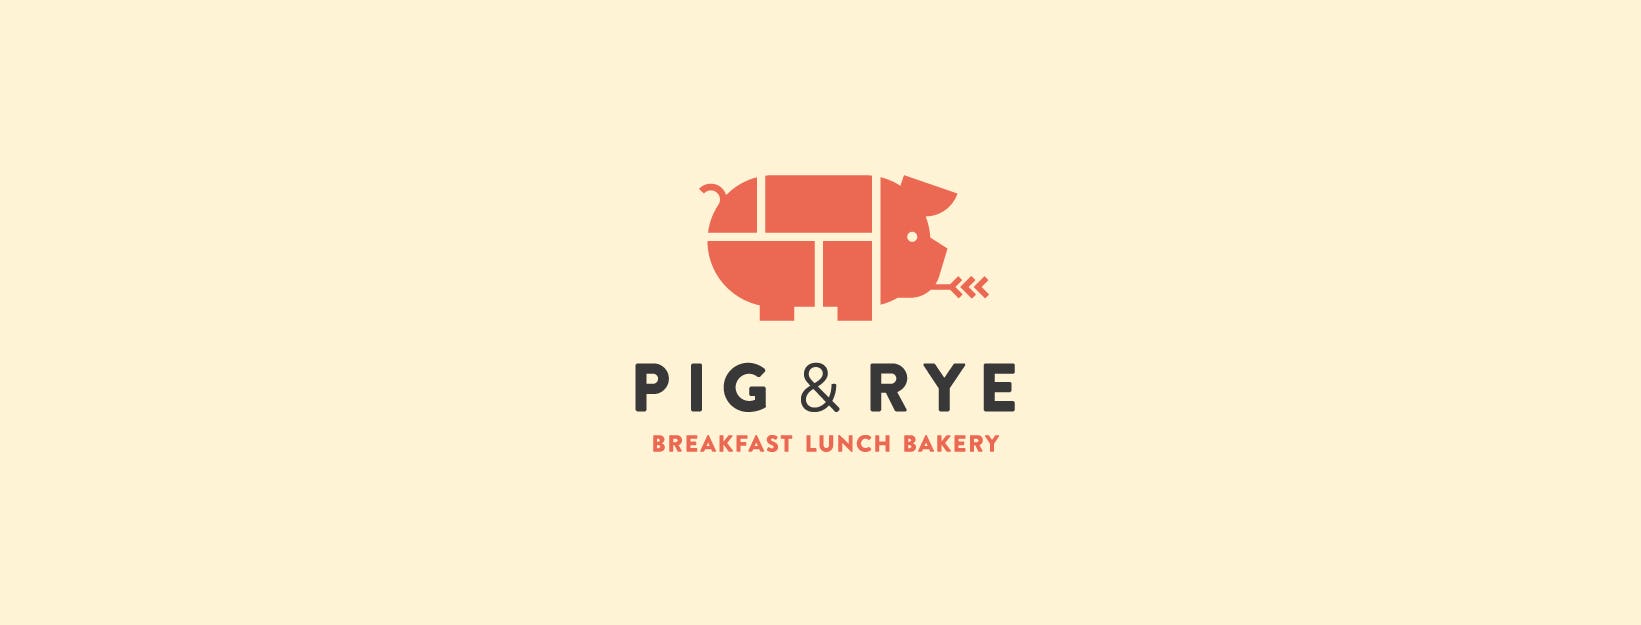 Pig &Rye in Tilburg staat te koop: chef Luc Martin gaat iets anders doen